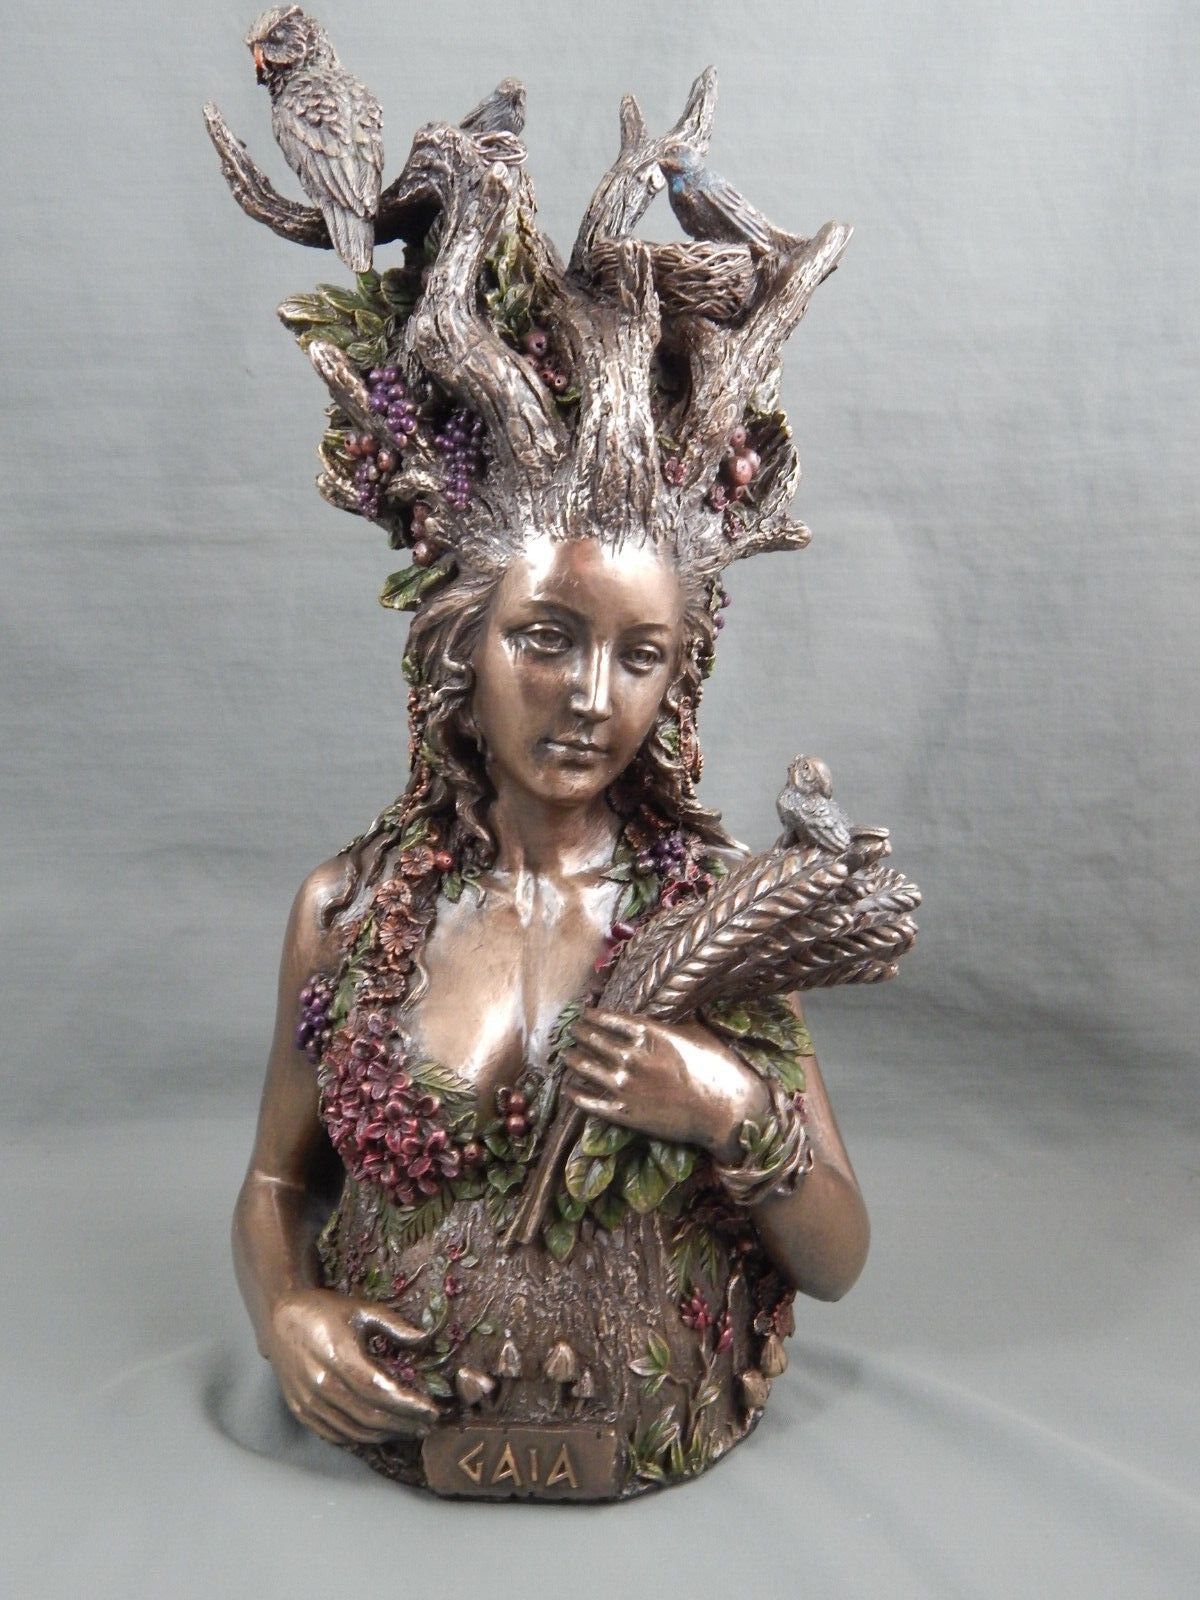 Veronese Gaia Mother Earth Goddess Statue Figurine Bronze Finish EUC w/box